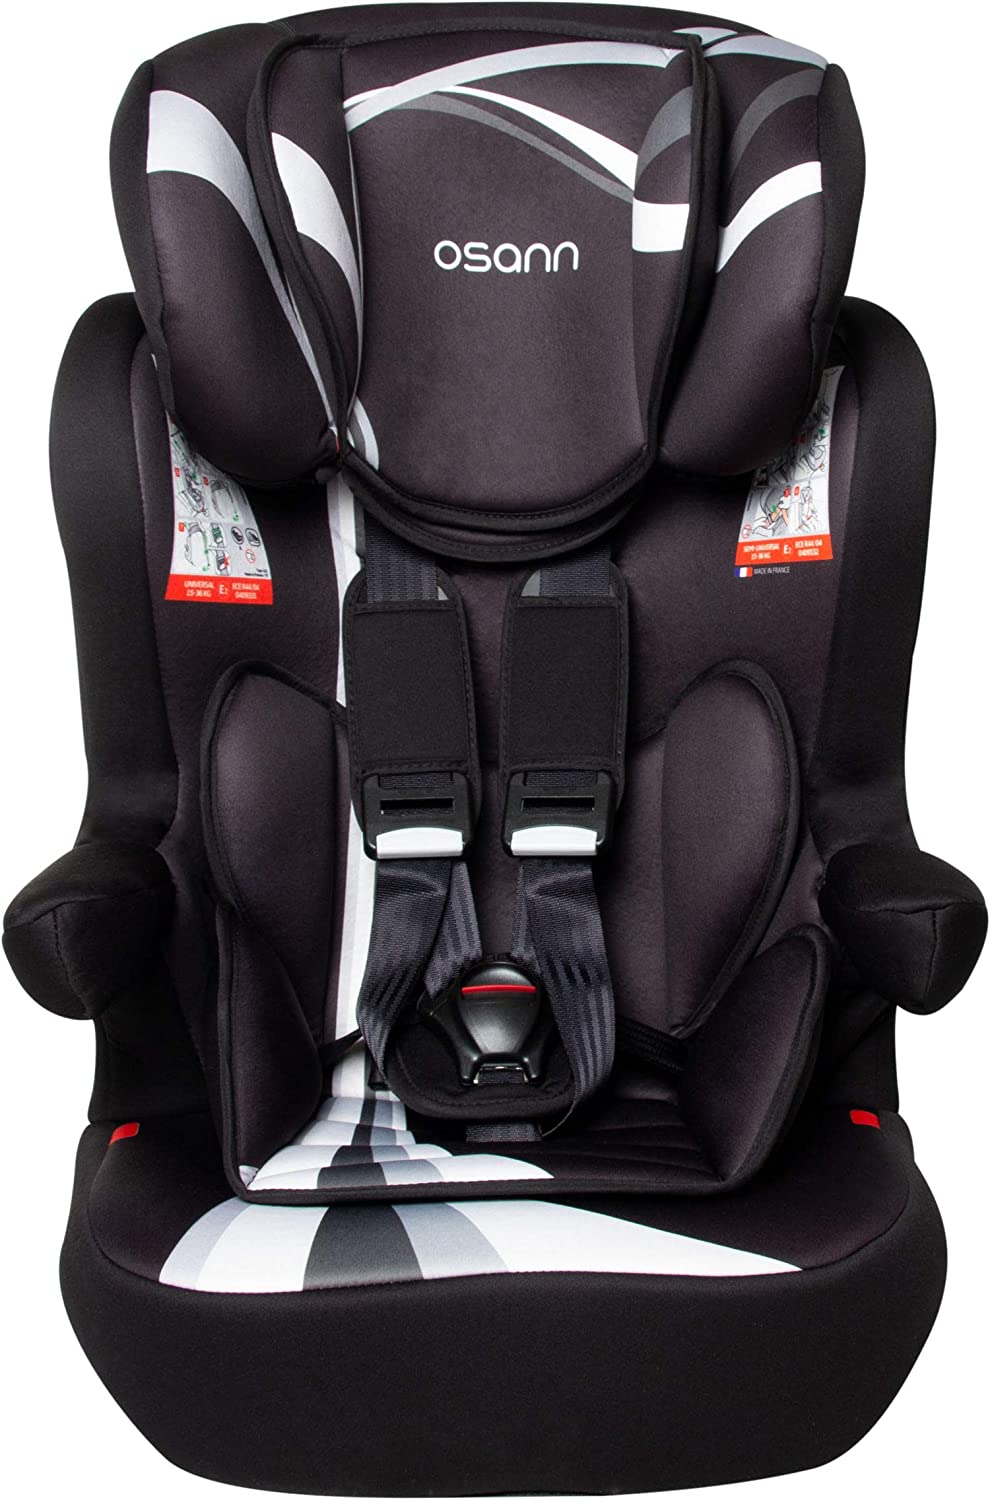 Osann I-Max SP Isofix Child Car Seat Group 1/2/3 (9-36 kg) Grey